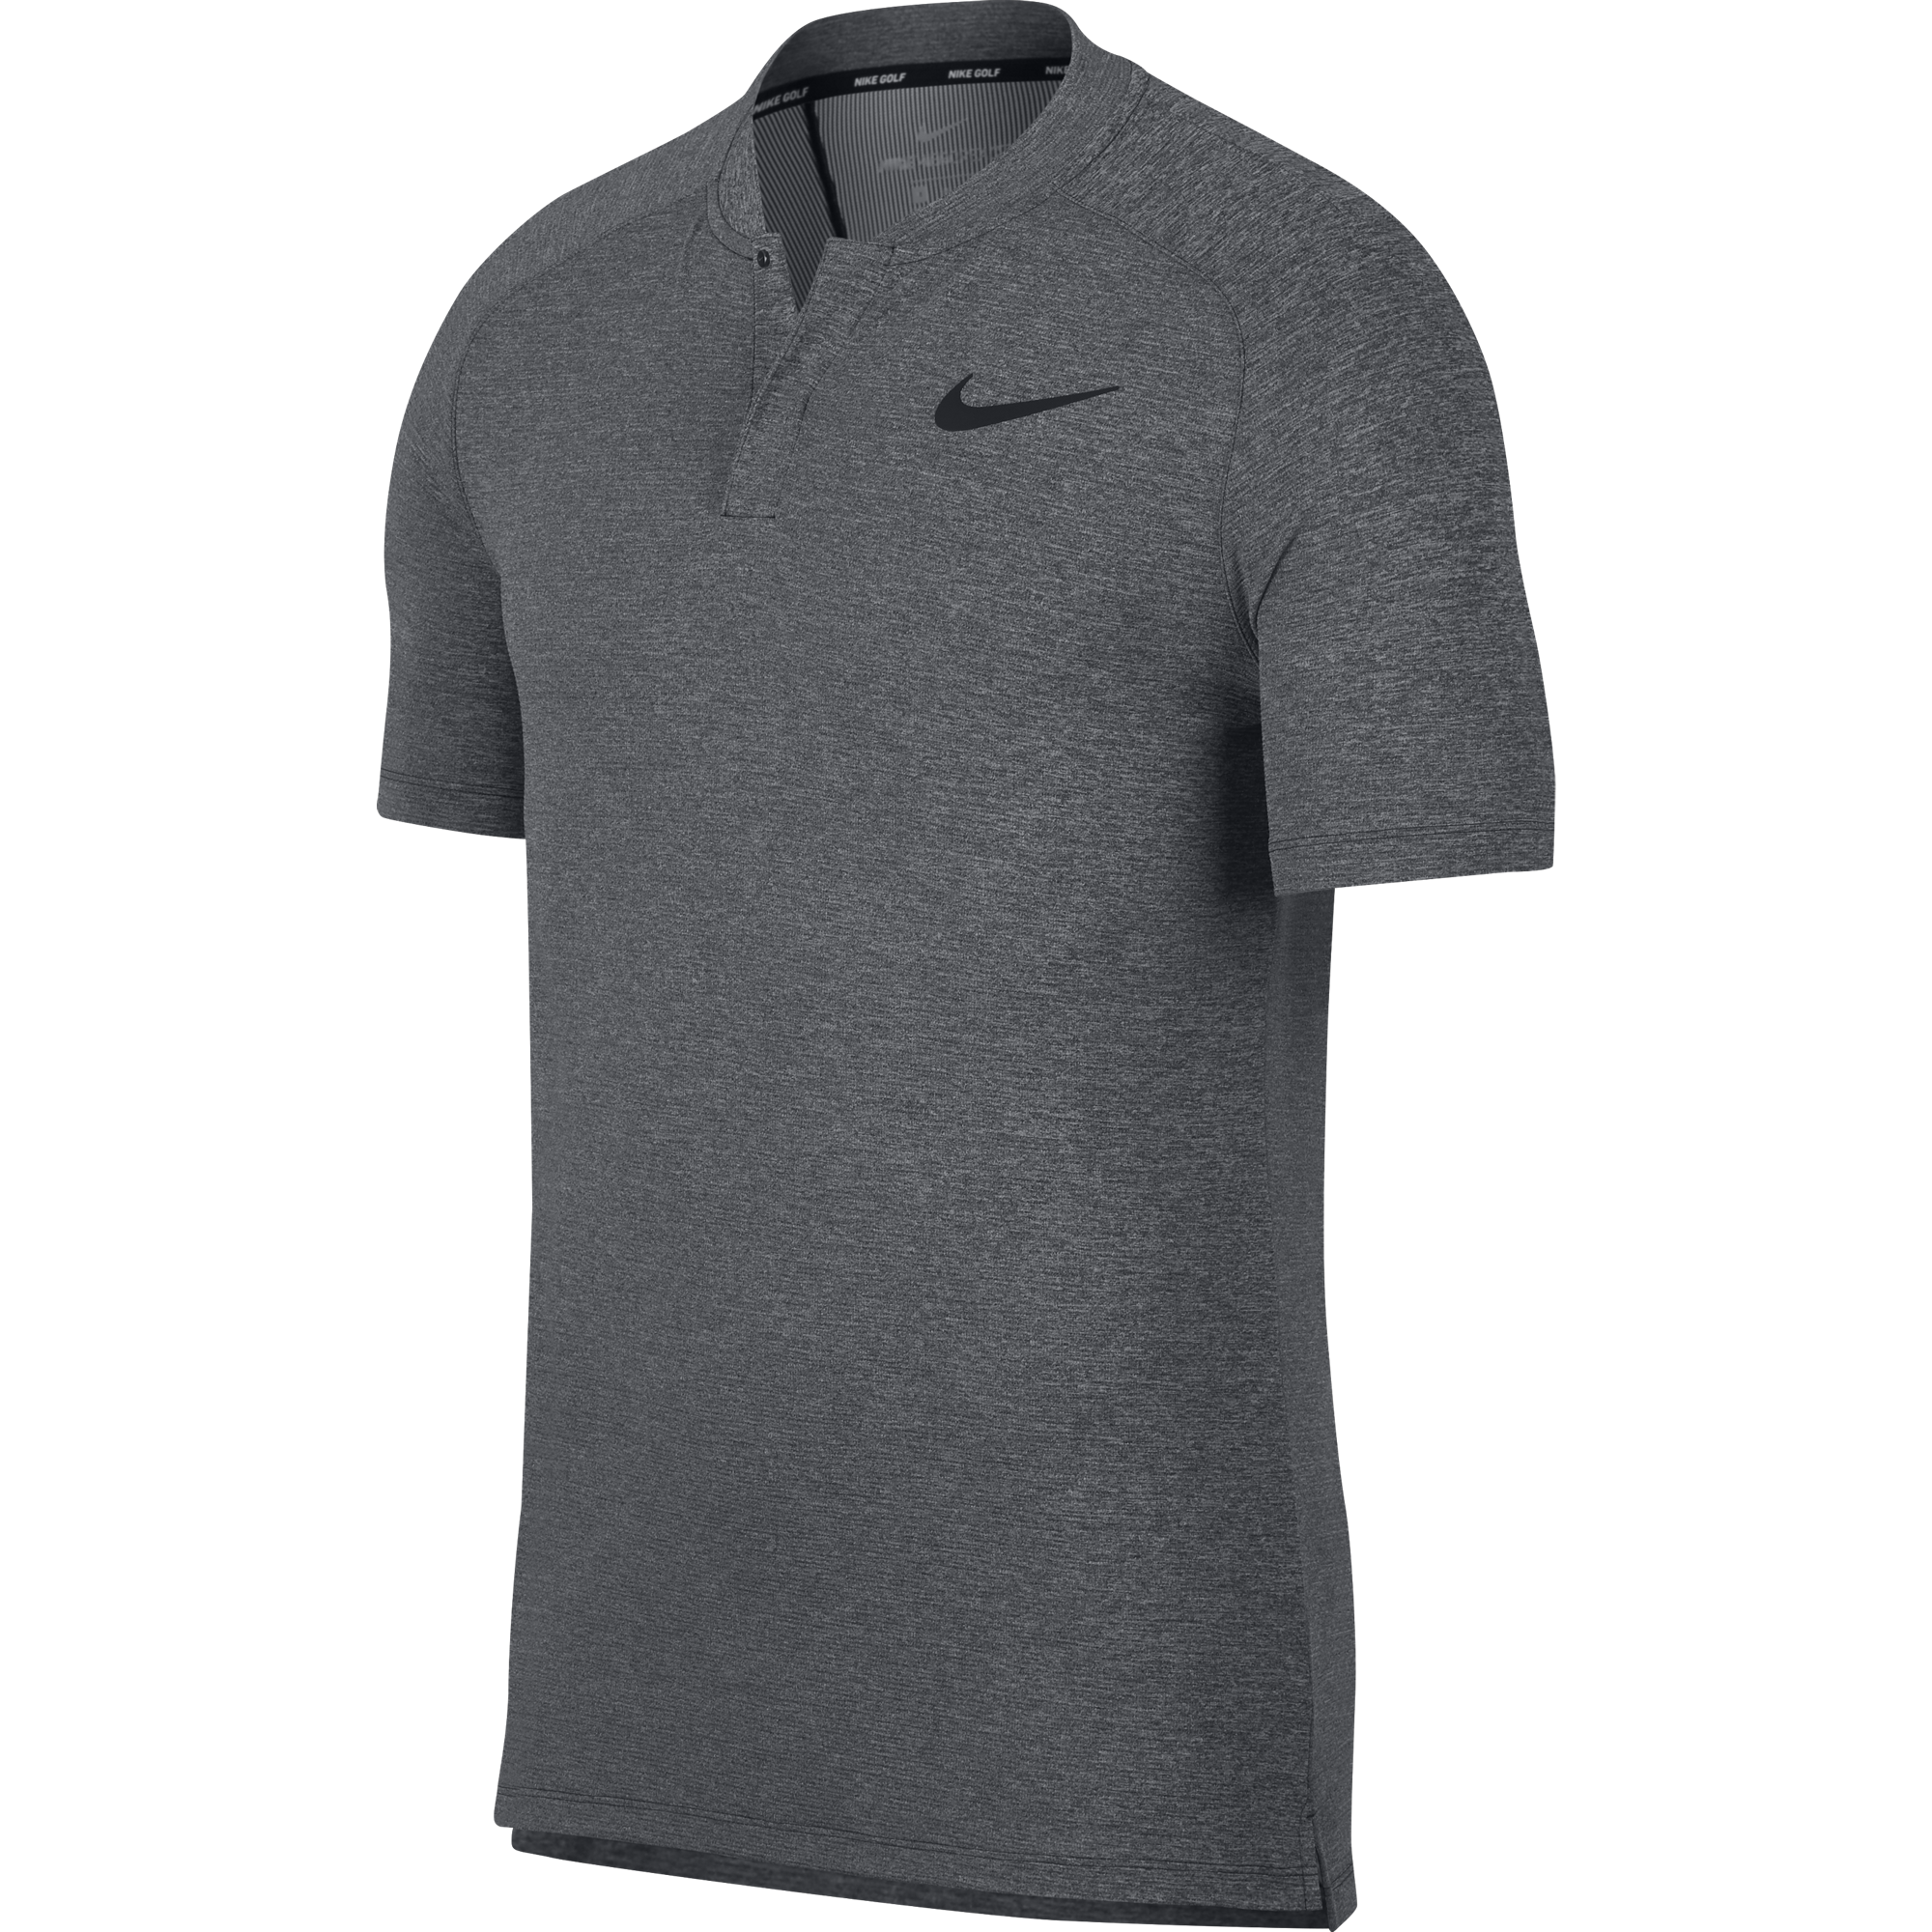 Nike Golf Dri-Fit. Nike Court Polo Blue Black Green Dri Fit. Поло Nike Dri Fit. Nike Victory Shirt Dri Fit. Купить мужское поло большого размера